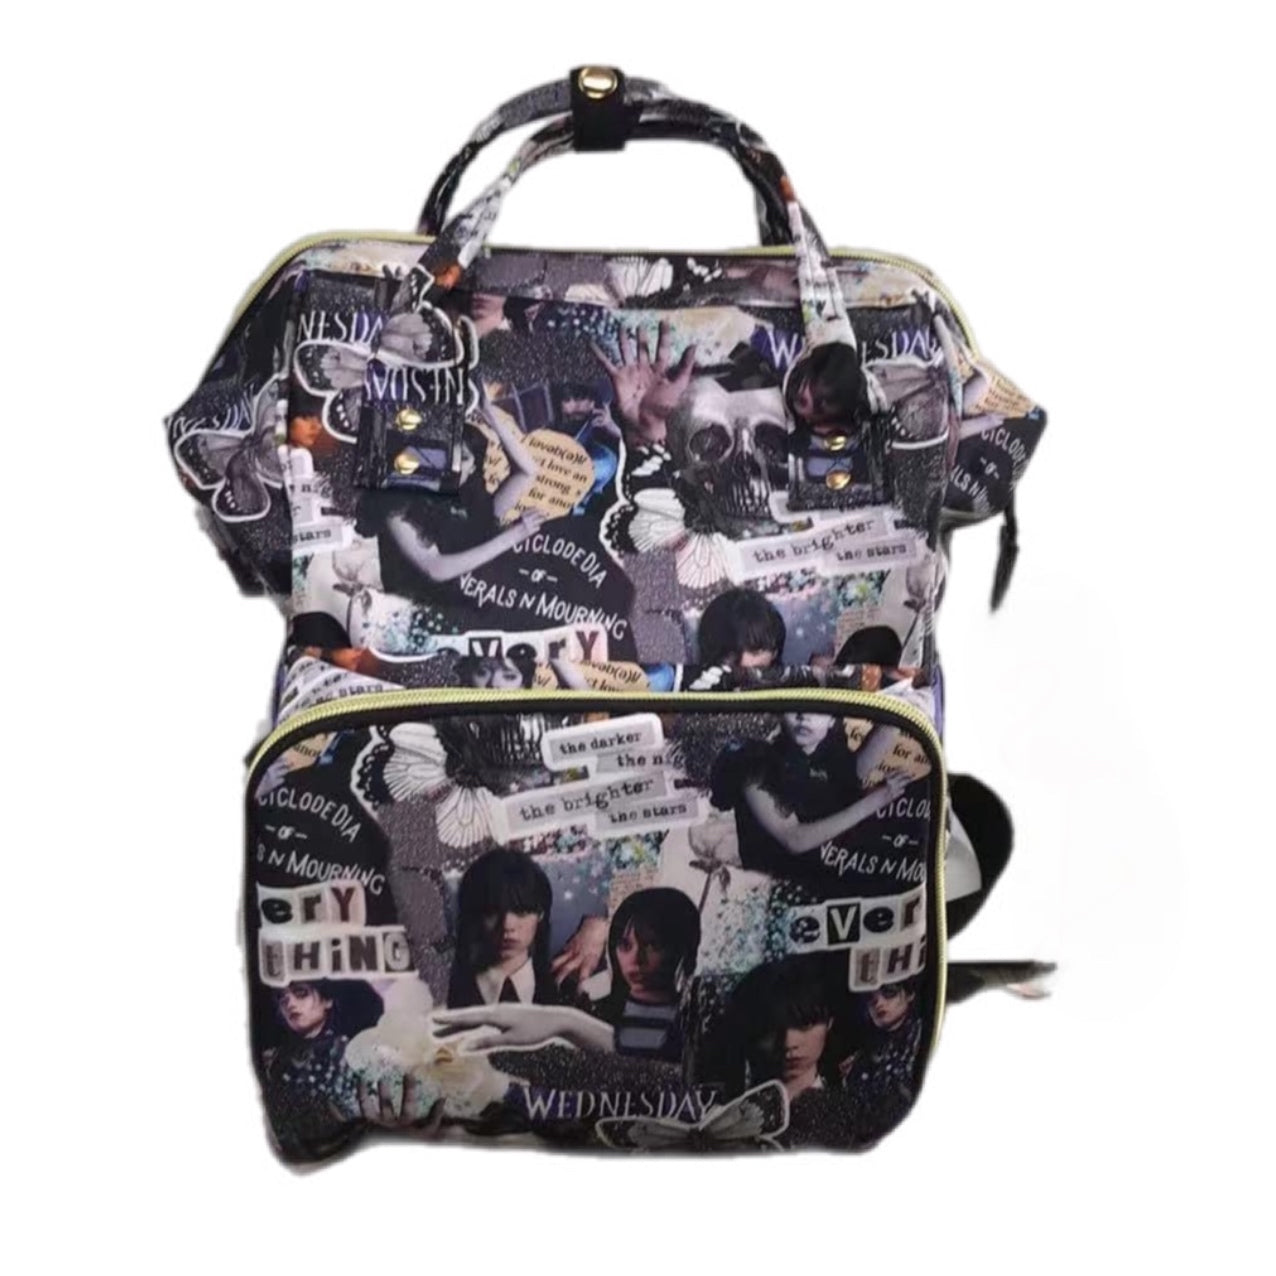 ᴡᴇᴇᴋʟʏ ᴘʀᴇ ᴏʀᴅᴇʀ Diaper Bag Backpack- Nevermore 10x16”